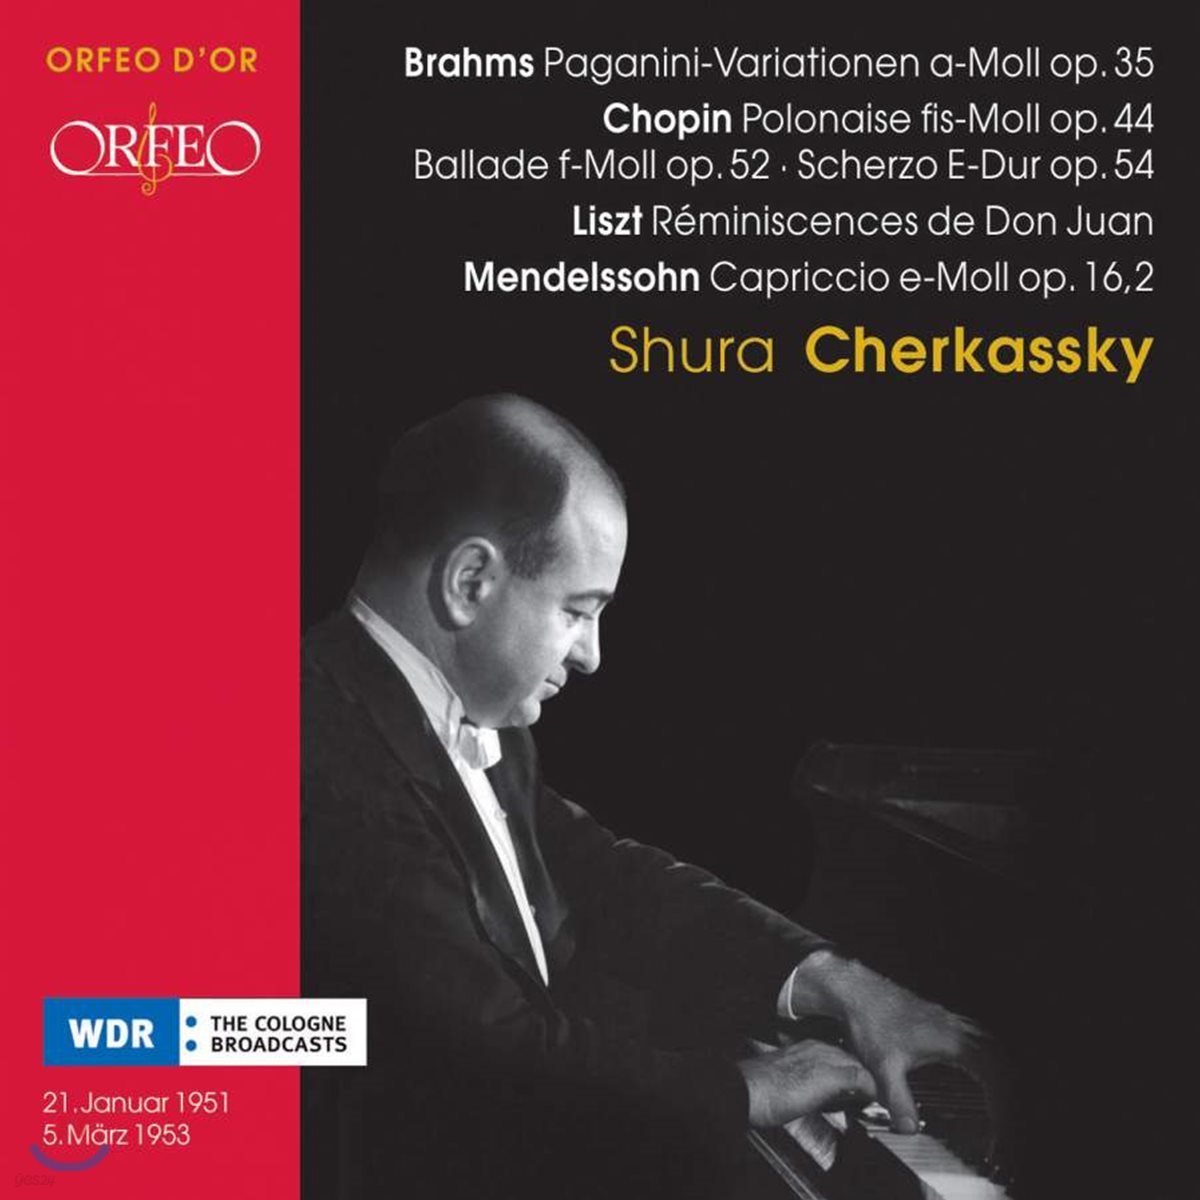 Shura Cherkassky 쇼팽: 폴로네이즈 / 브람스: 파가니니 변주곡 / 리스트 : 돈 주앙의 회상 (Chopin: Polonaise Op.44 / Brahms: Paganini Variation Op.35 / Liszt: Reminiscences de Don Juan) 